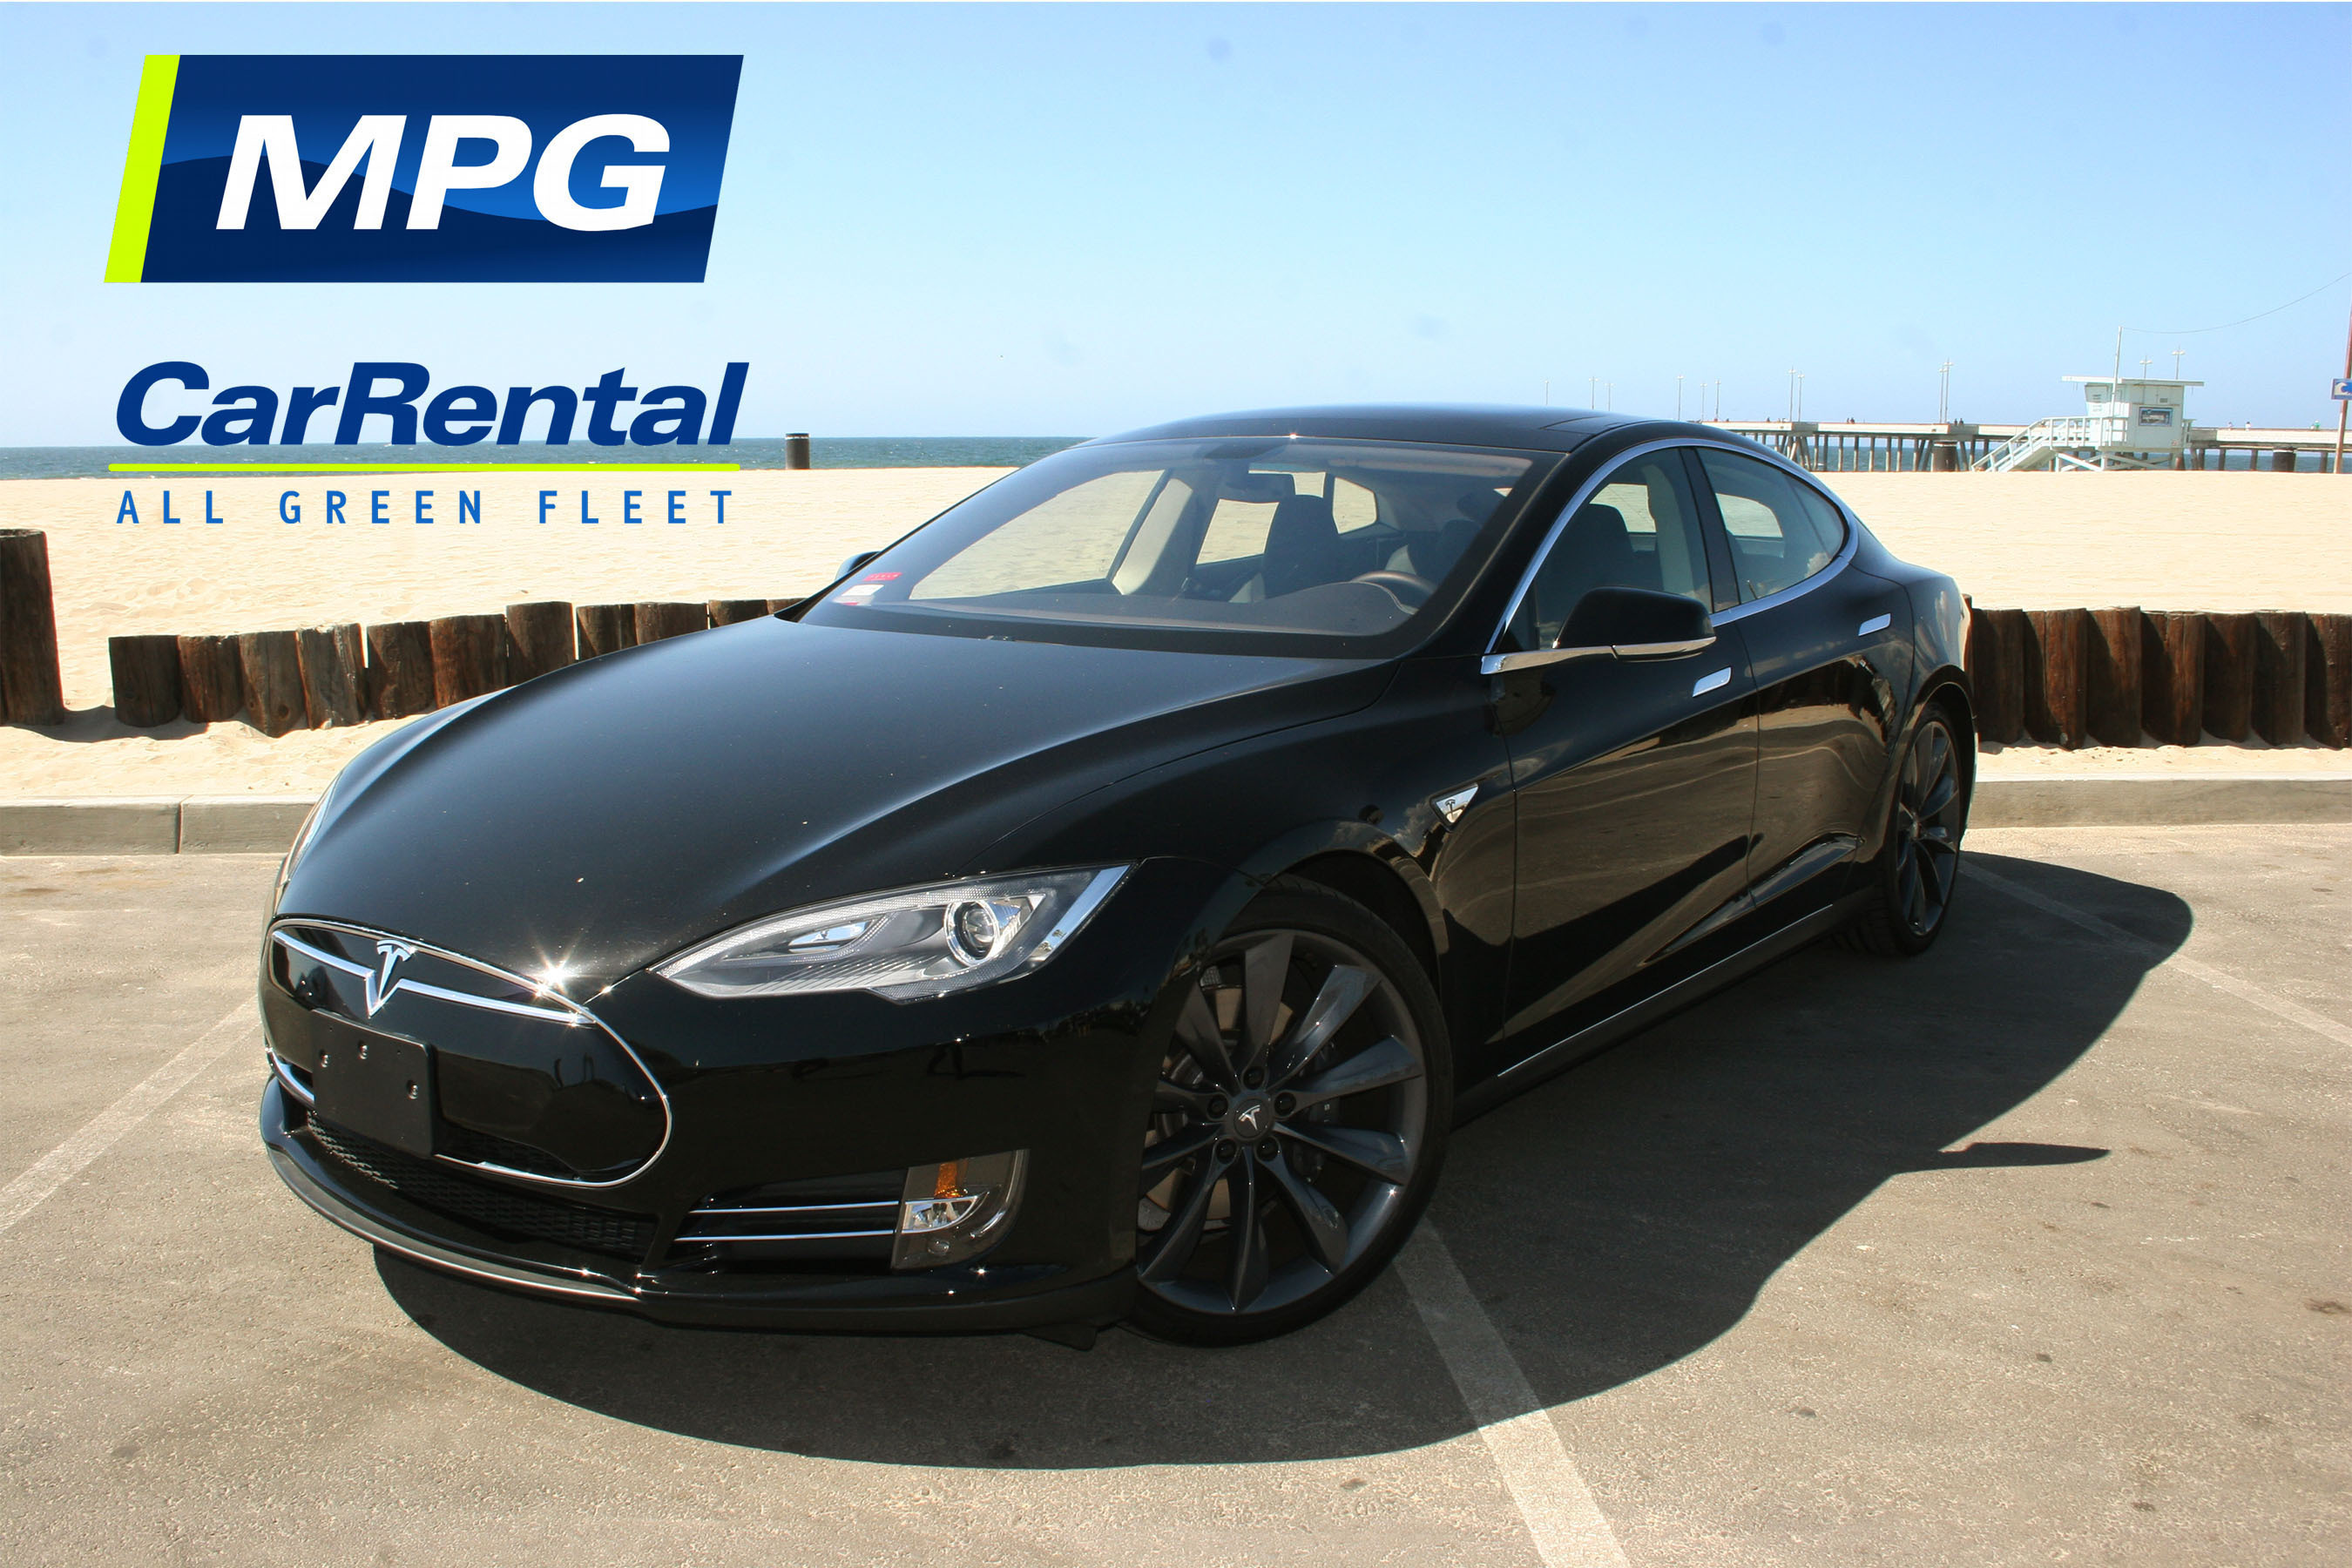 Tesla Model S MPG Car Rental. (PRNewsFoto/MPG Car Rental) (PRNewsFoto/MPG CAR RENTAL)